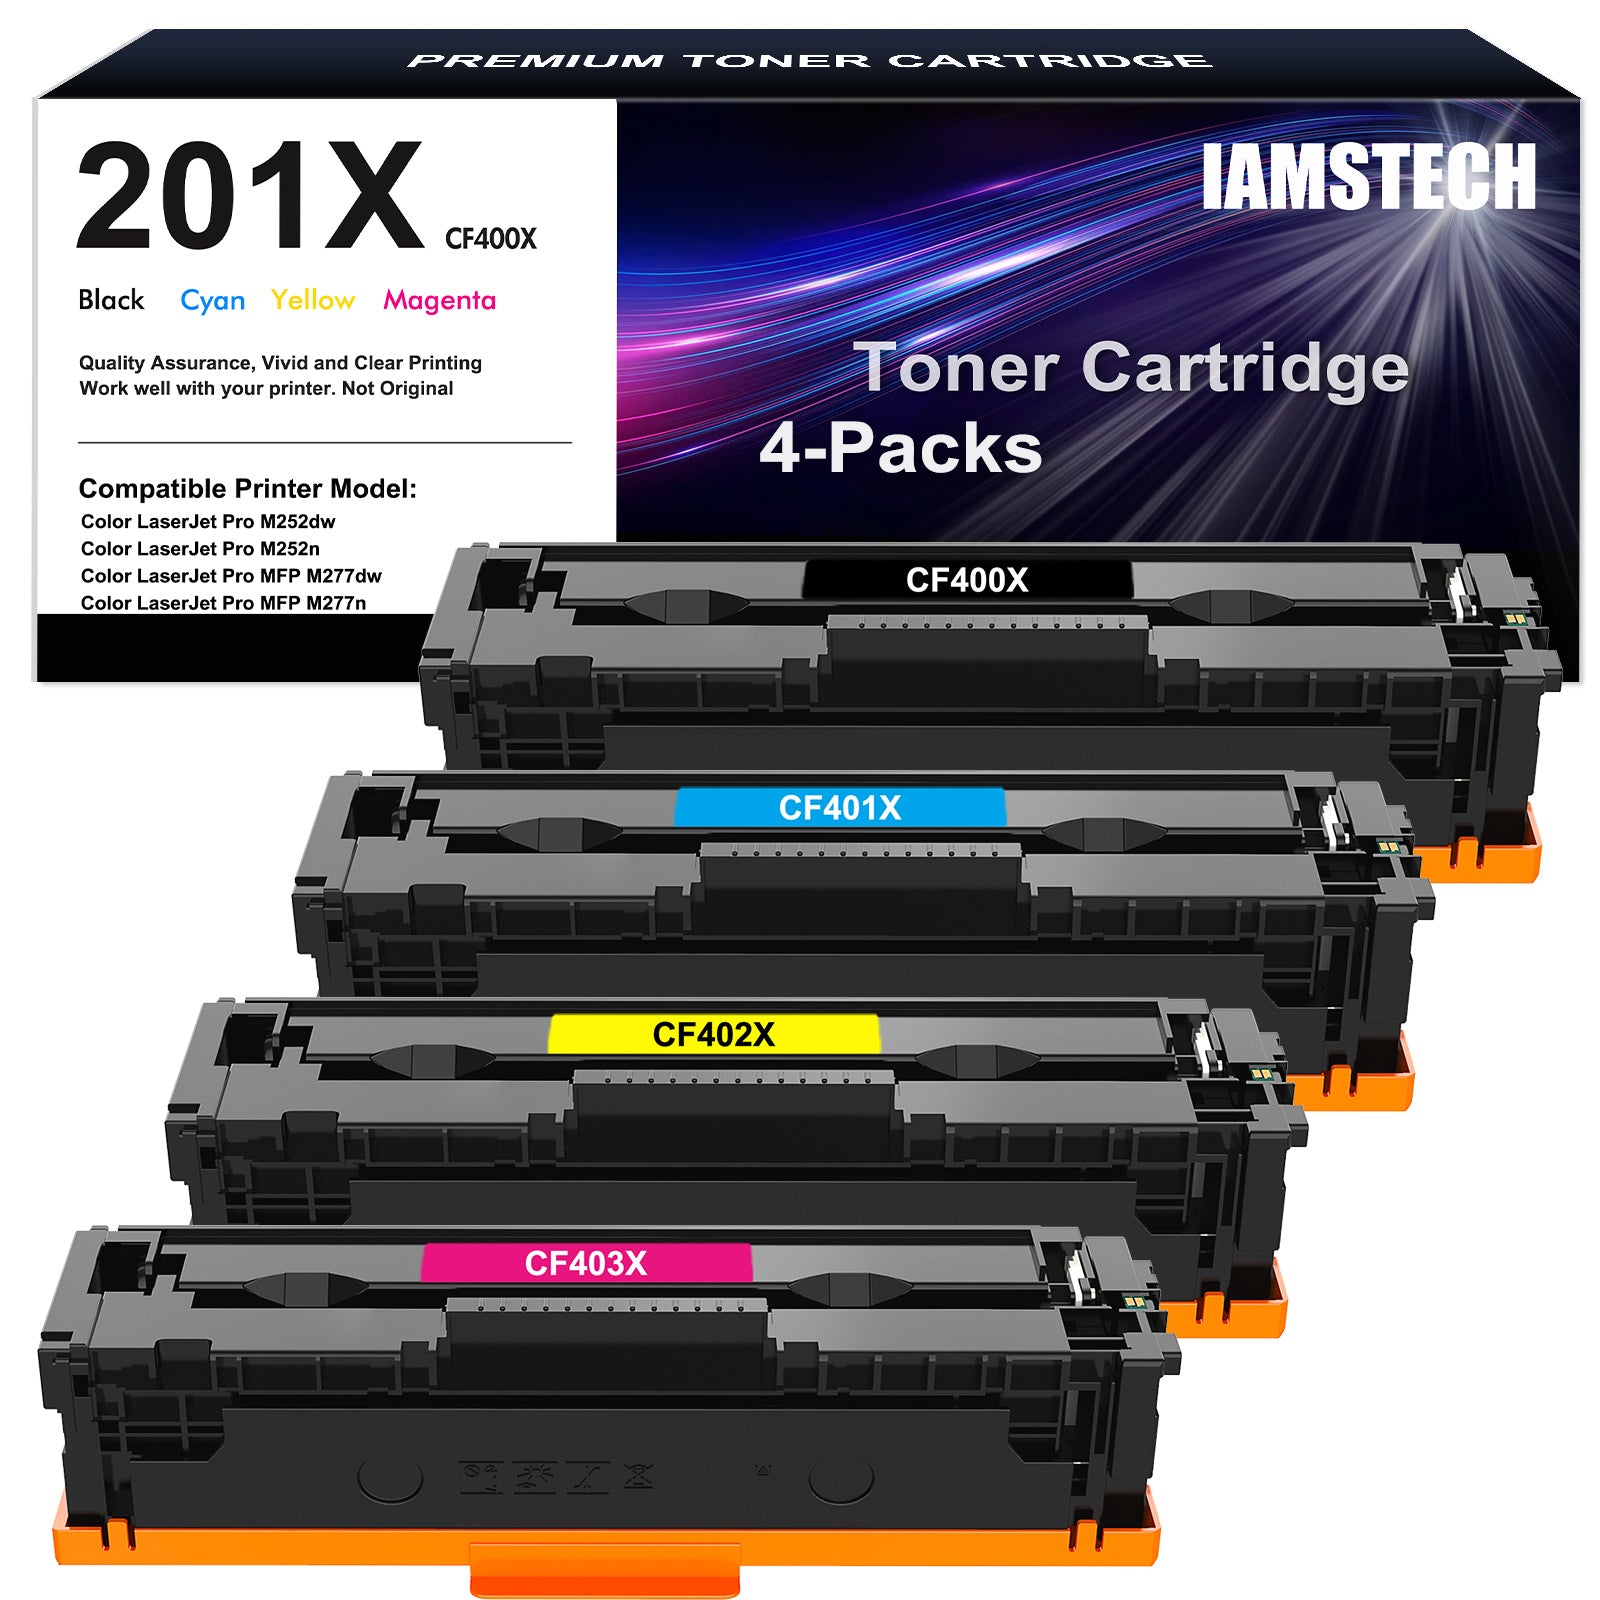 201X 201A CF400X Compatible Toner for HP CF400X CF401X CF402X CF403X Pro M252dw M252n MFP M277n M277dw M277c6 M274n Printers (Black Cyan Magenta Yellow, 4-PACK)